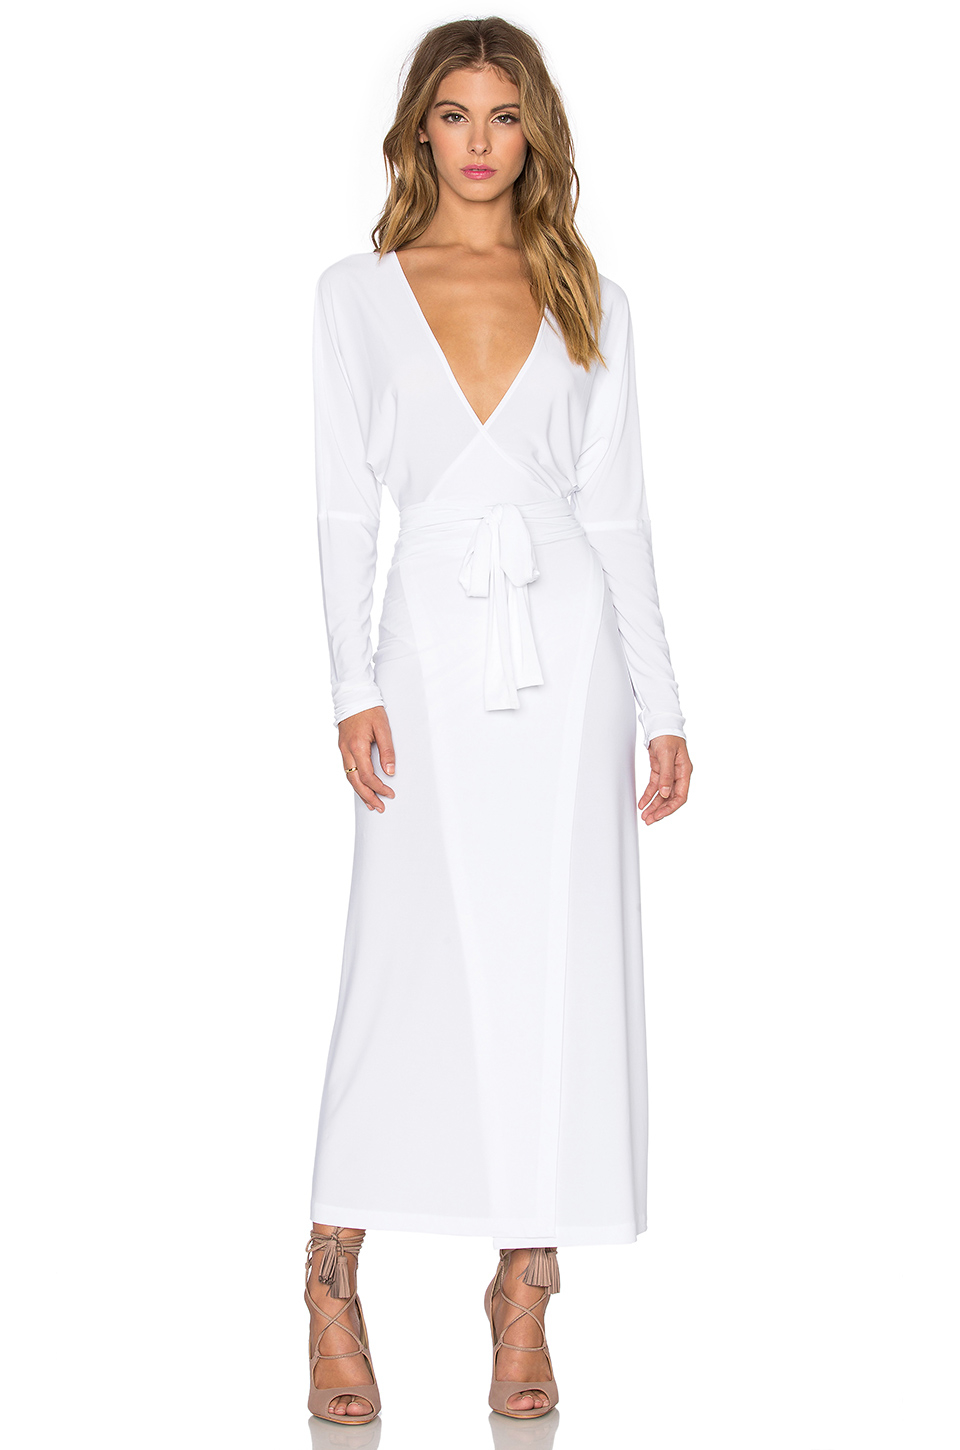 Lyst - Norma Kamali Dolman Wrap Midi Dress in White